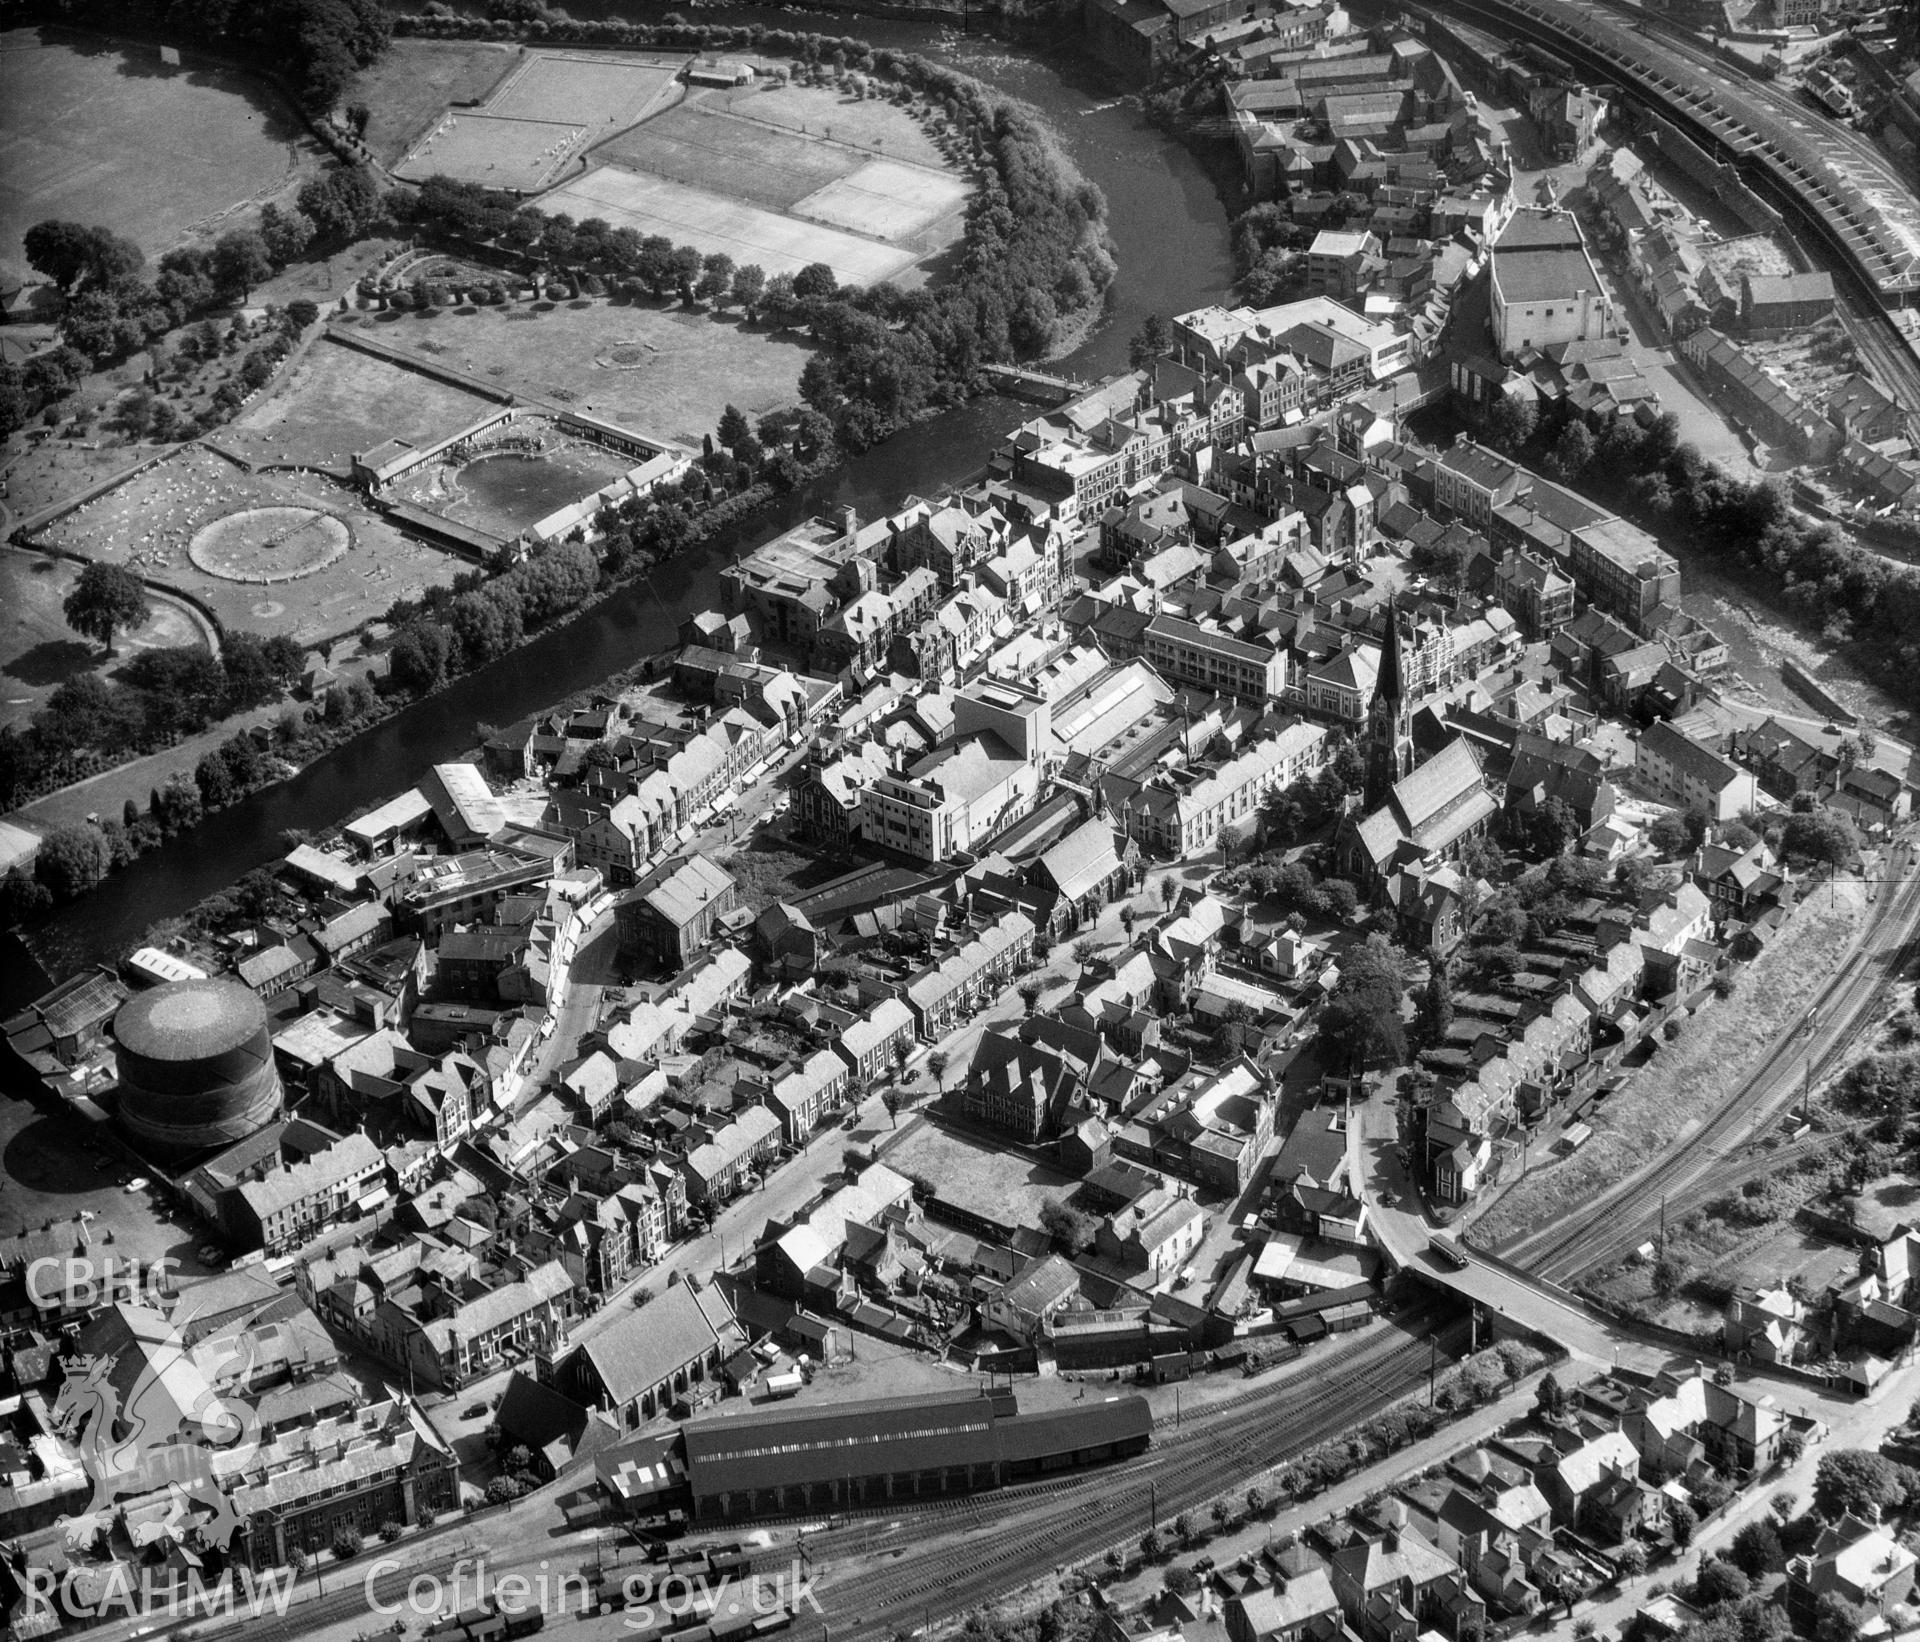 Digital copy of a black and white oblique aerial photograph showing Pontypridd Town Centre, taken by Aerofilms Ltd, 1955.